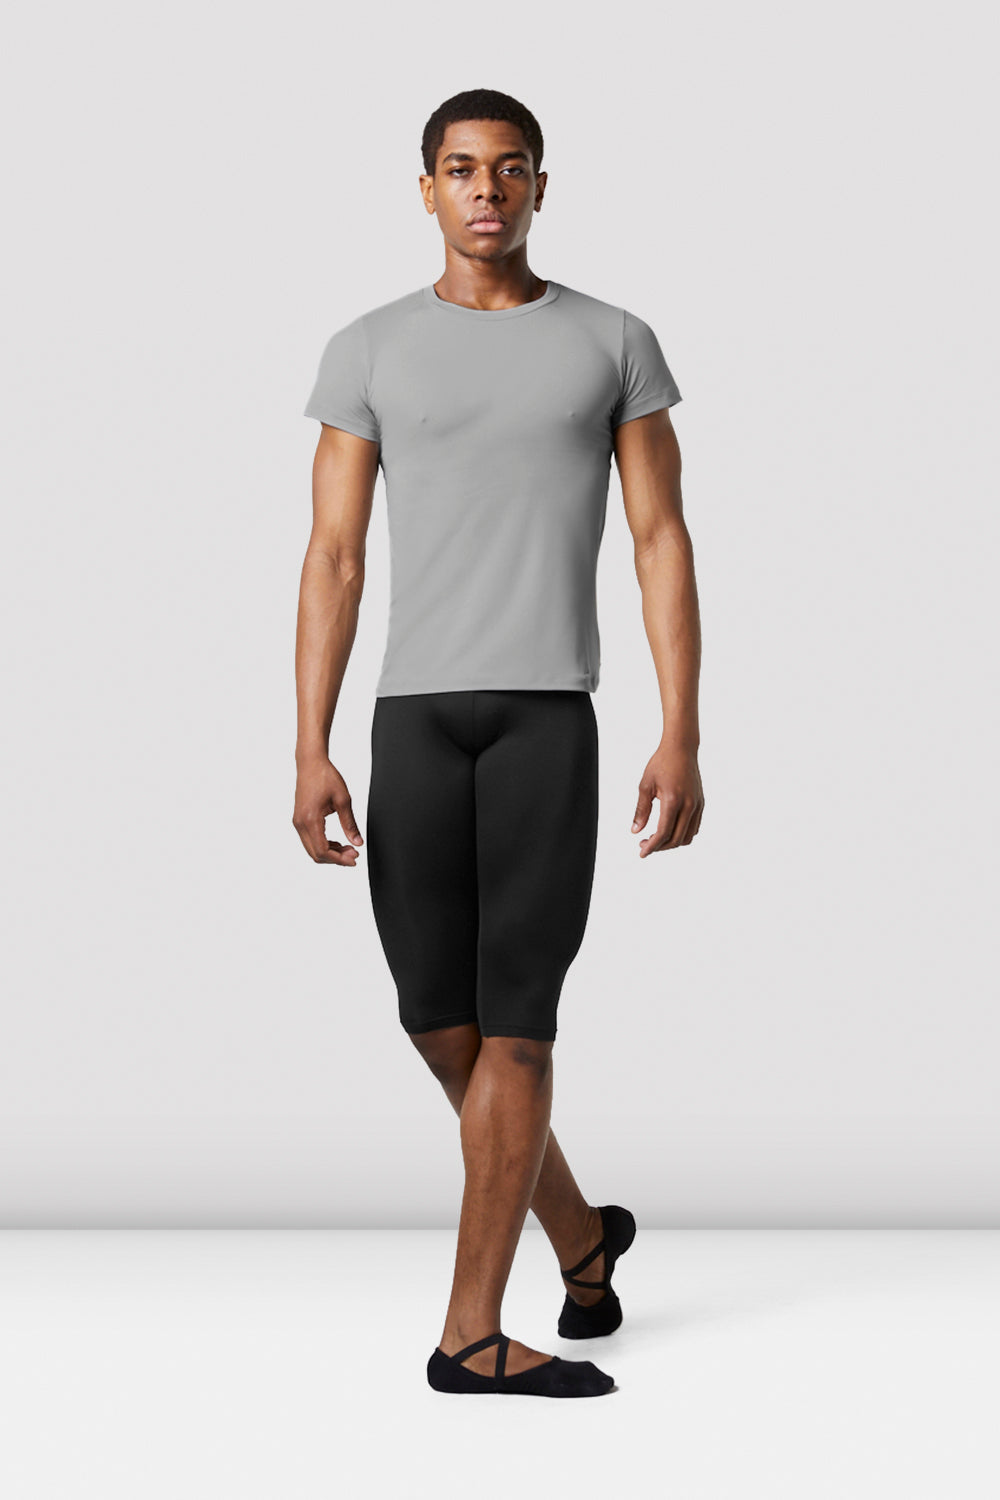 BLOCH Mens/Boys Fitted T-Shirt, Grey